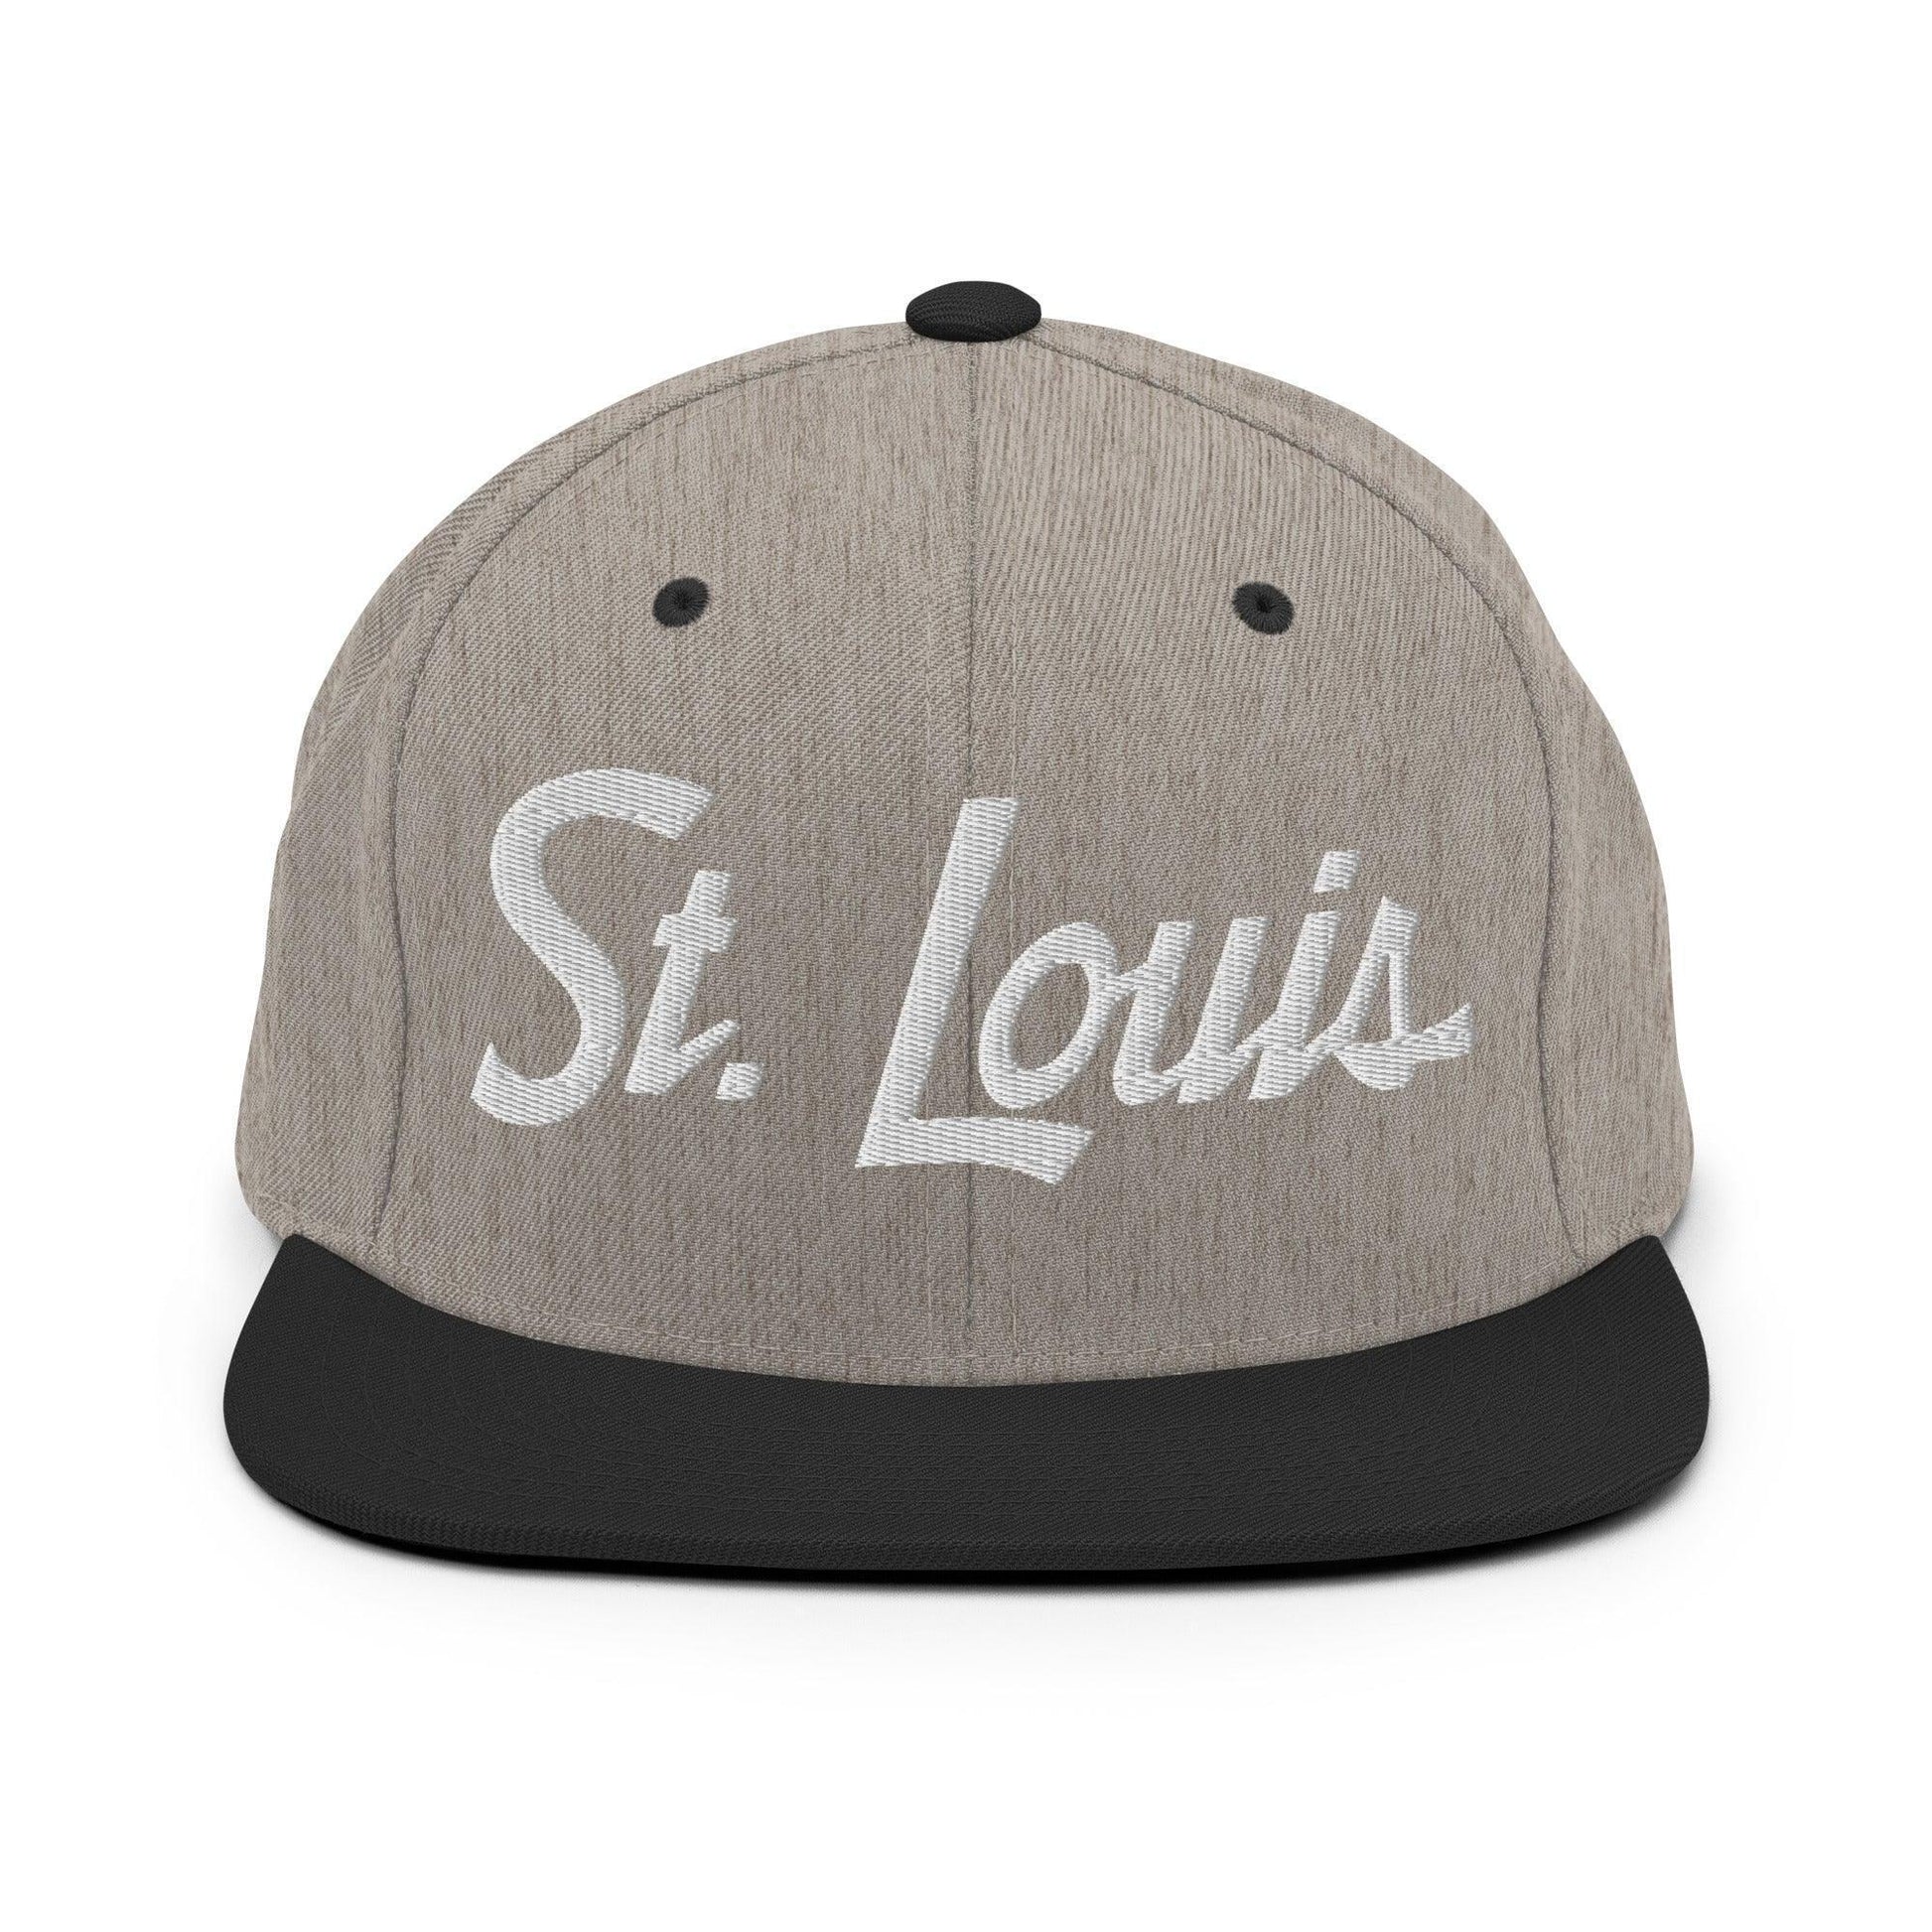 St. Louis Script Snapback Hat Heather/Black